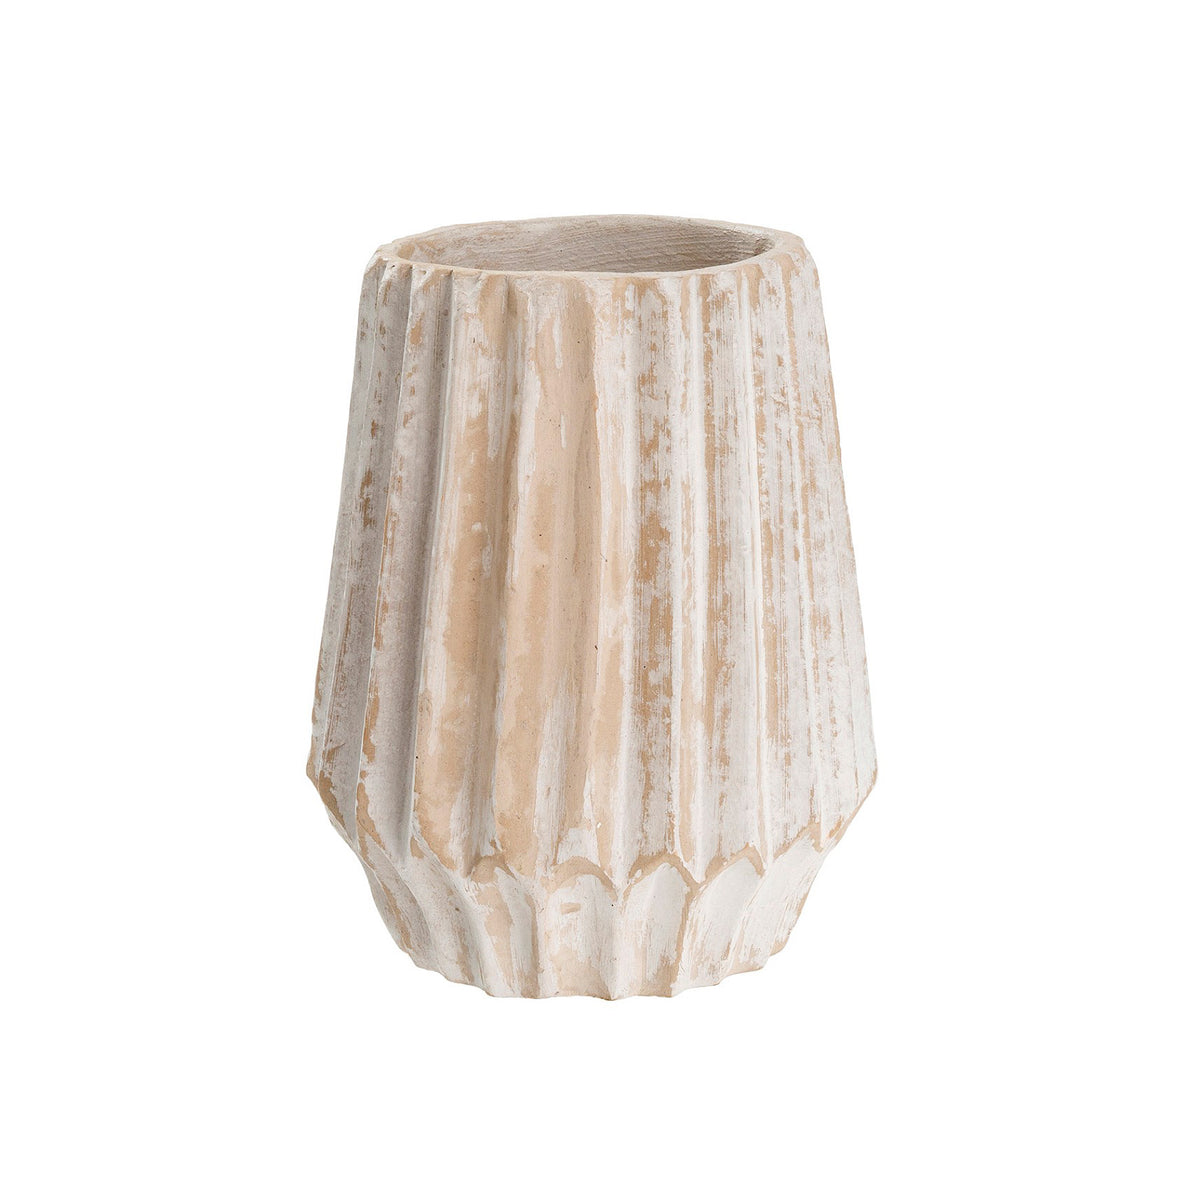 Athens Paper Mache Vase, Narrow